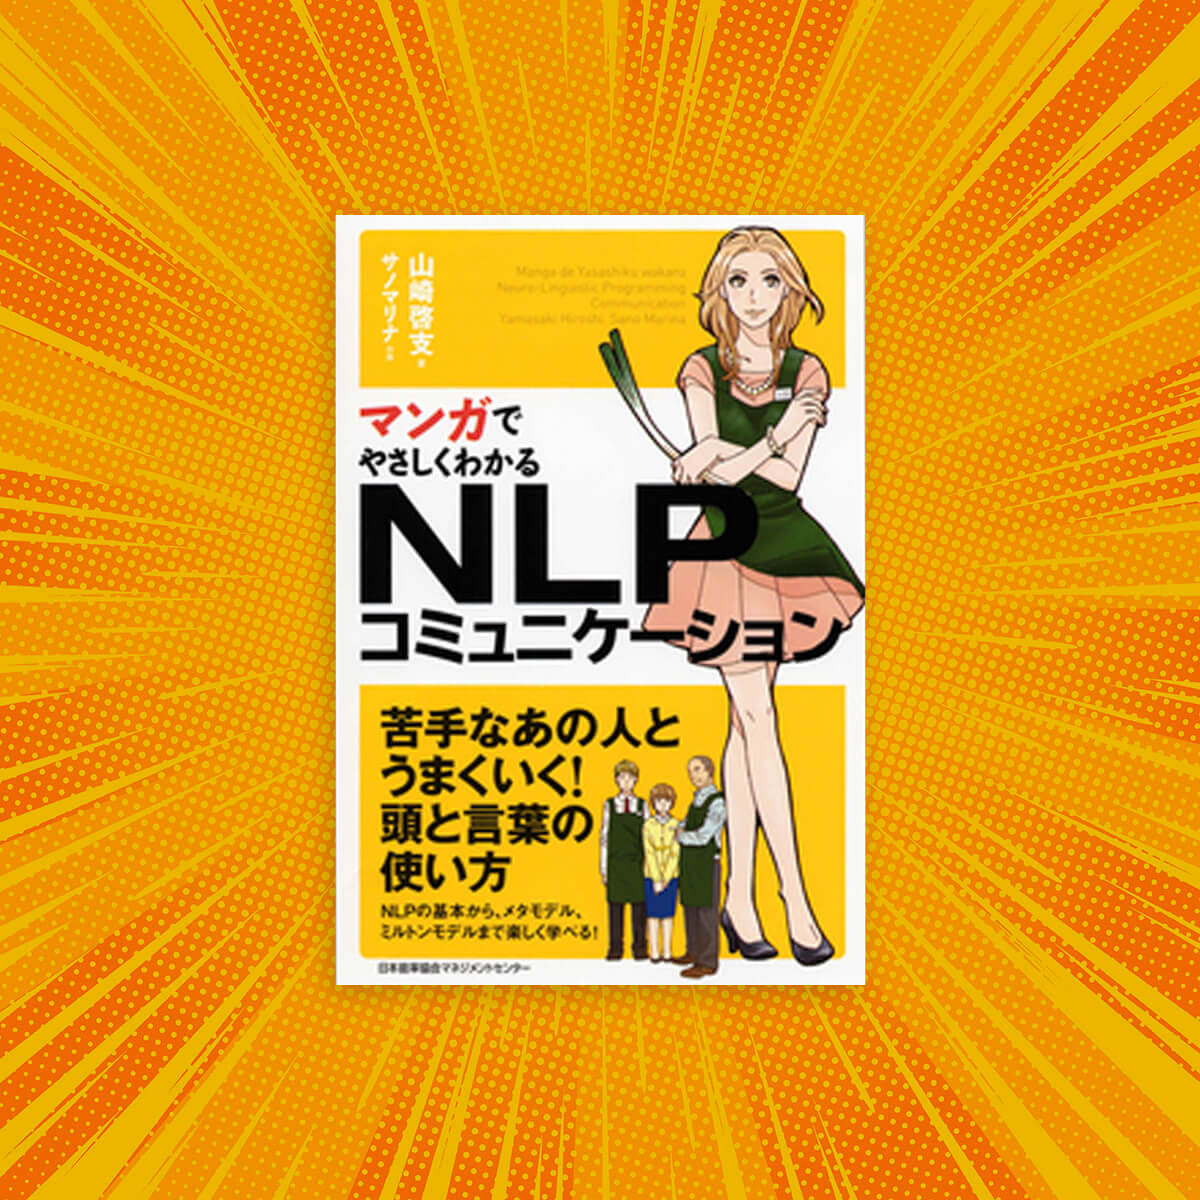 Easy reading through Manga | NLP Communication